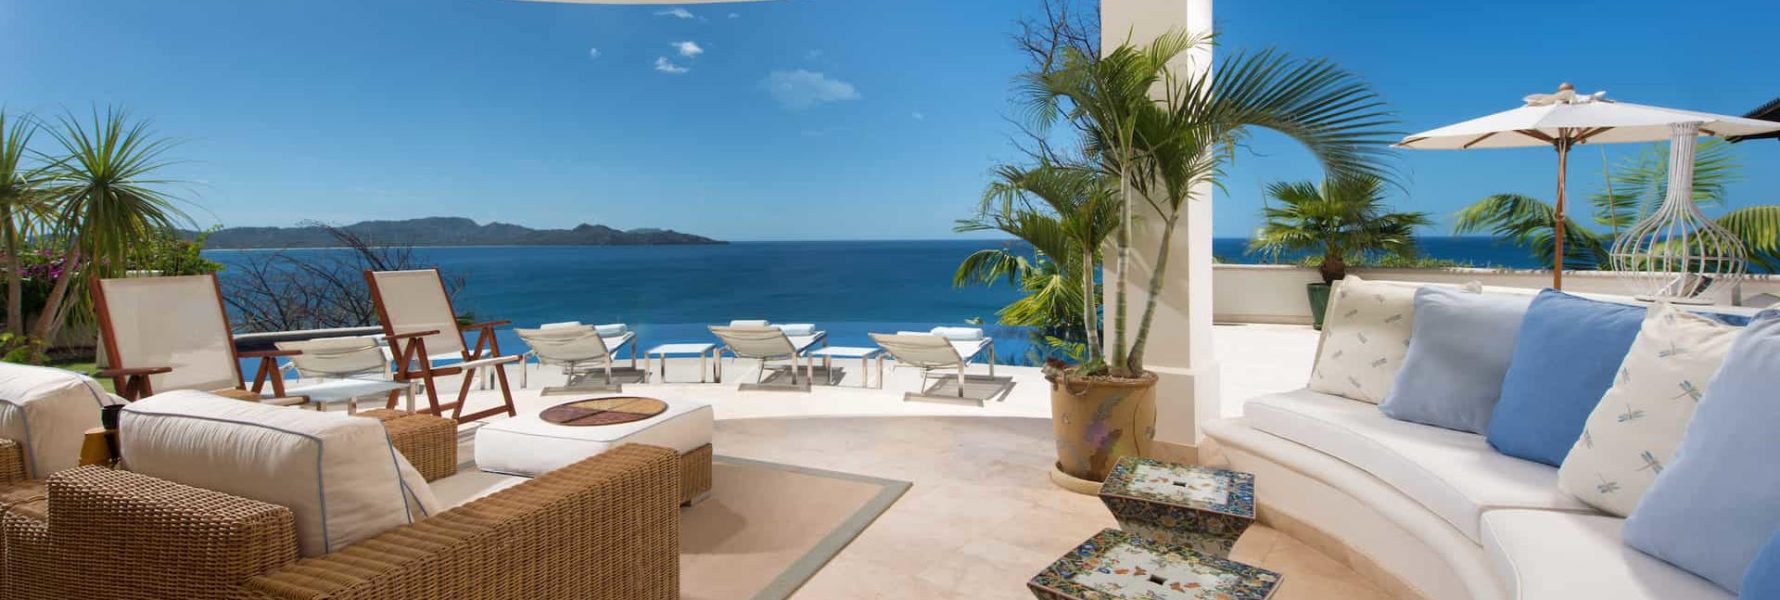 You will enjoy staying at this stunning villa sitting beachfront to Playa Flamingo.